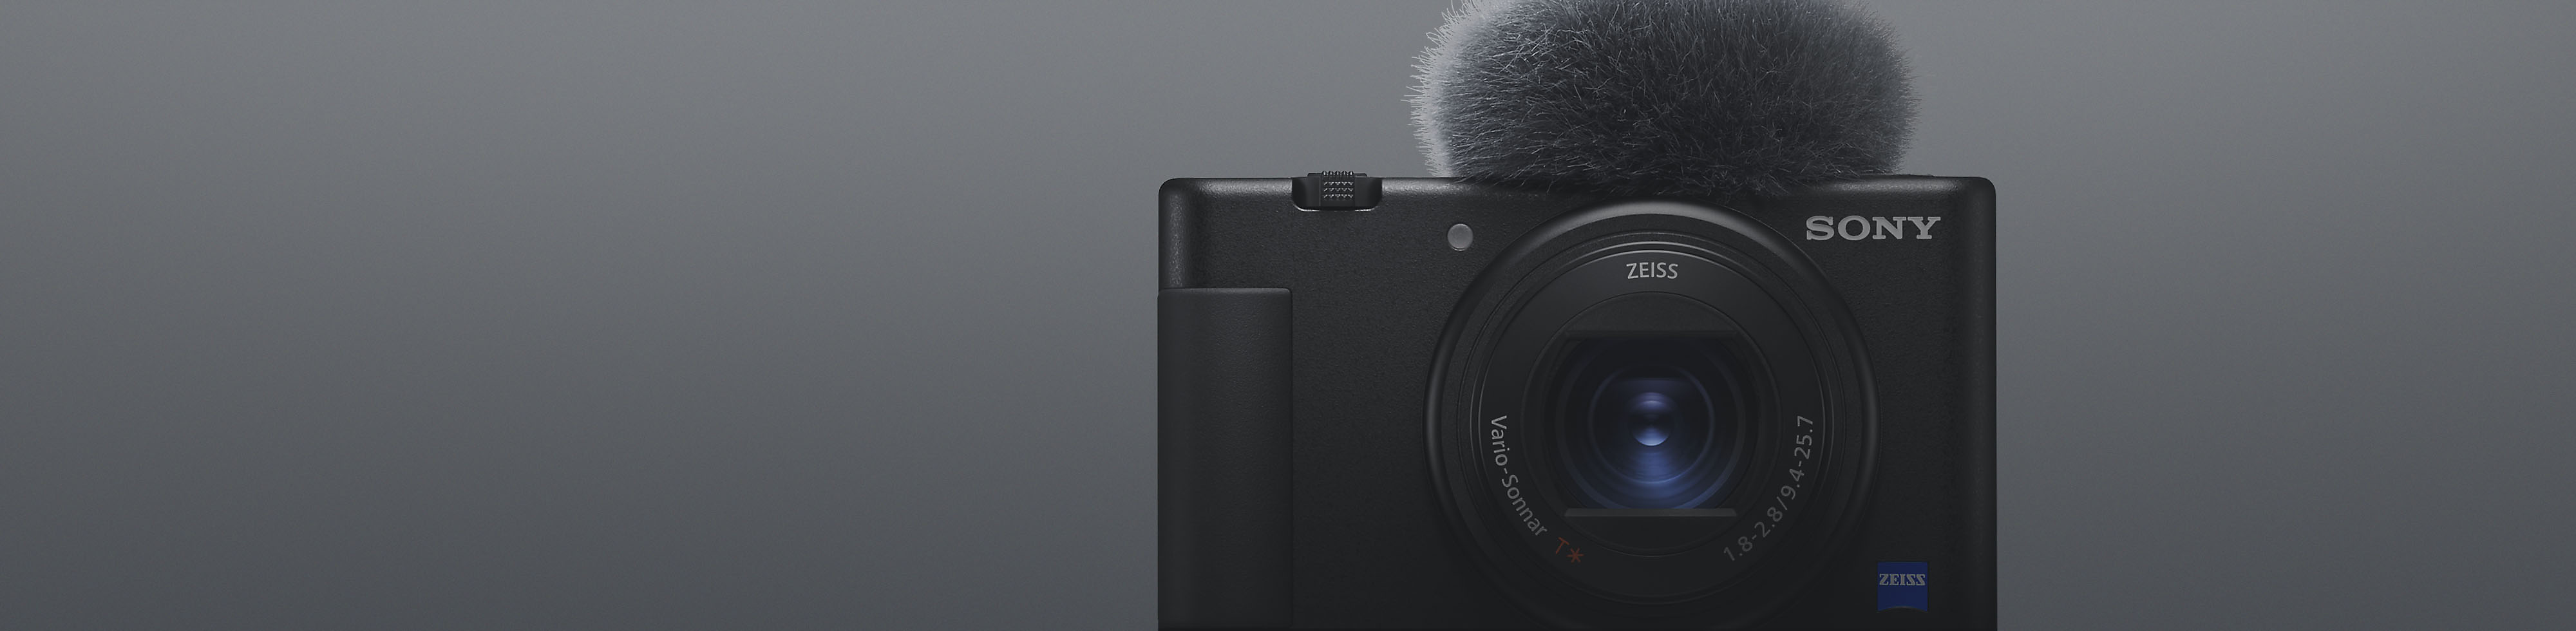 Pogled od spredaj na črno kompaktno kamero Sony s priključenim mikrofonom